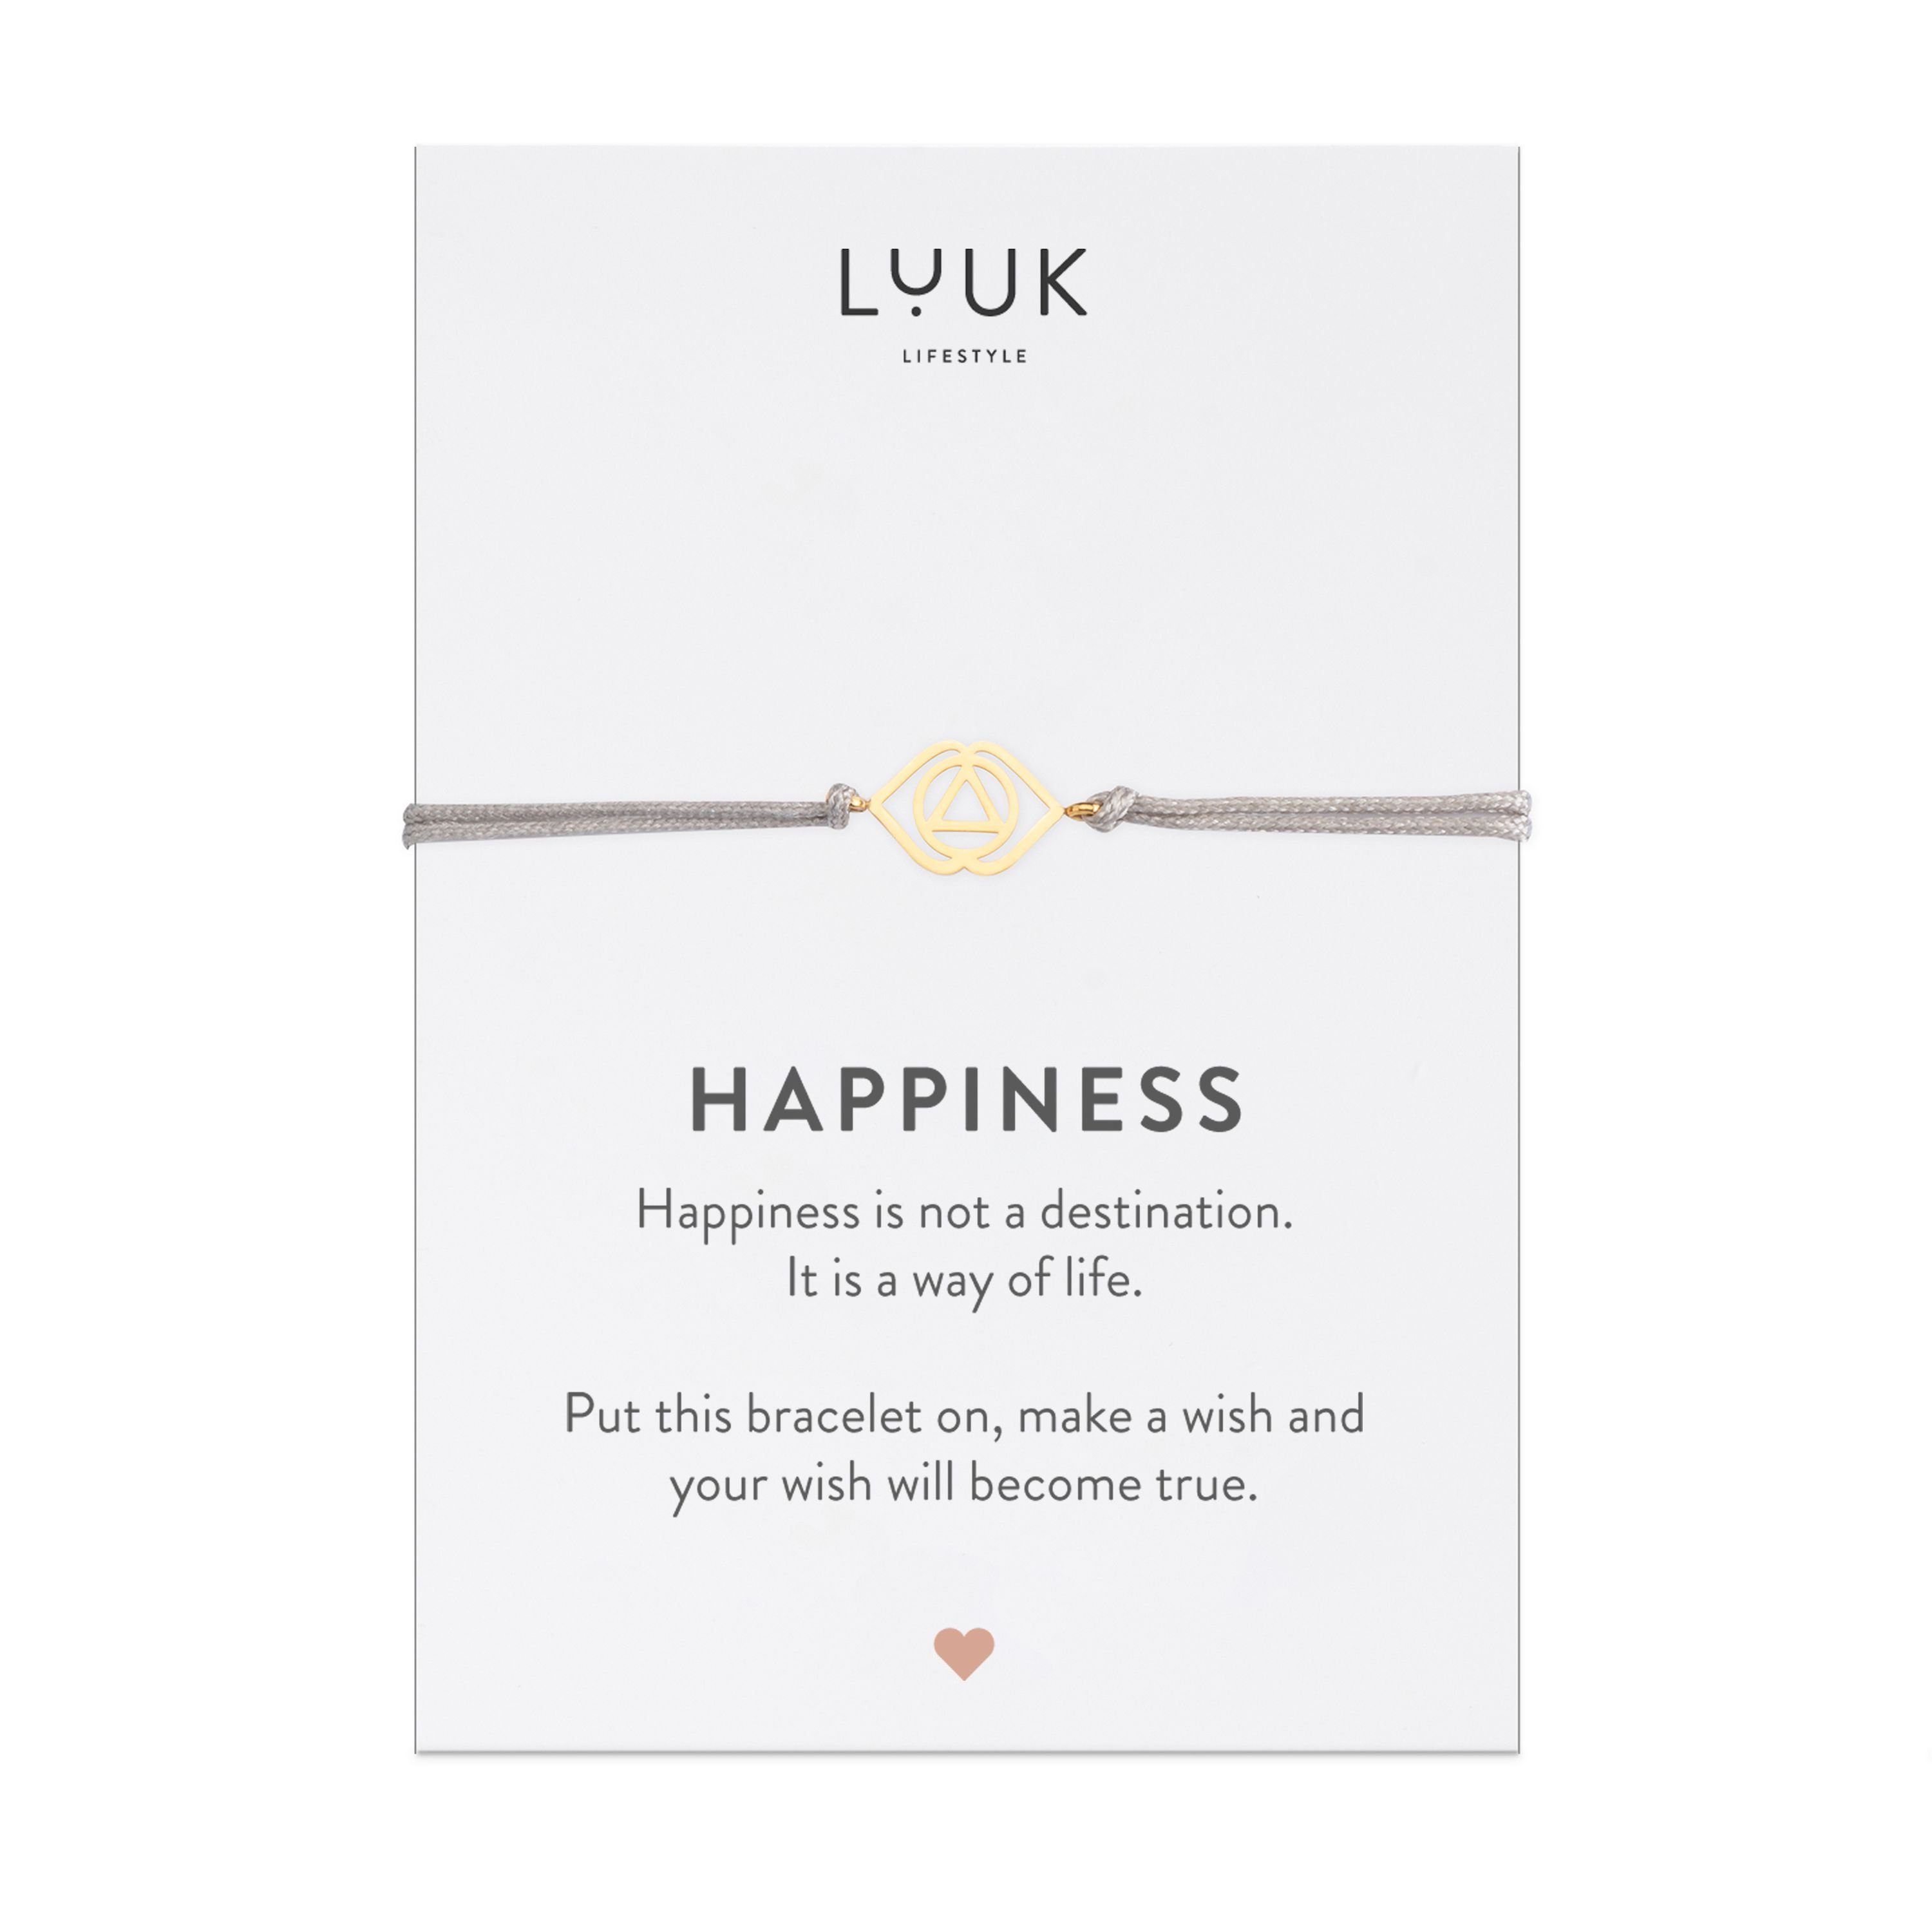 LUUK LIFESTYLE Freundschaftsarmband handmade, Spruchkarte Happiness Dreieck, mit